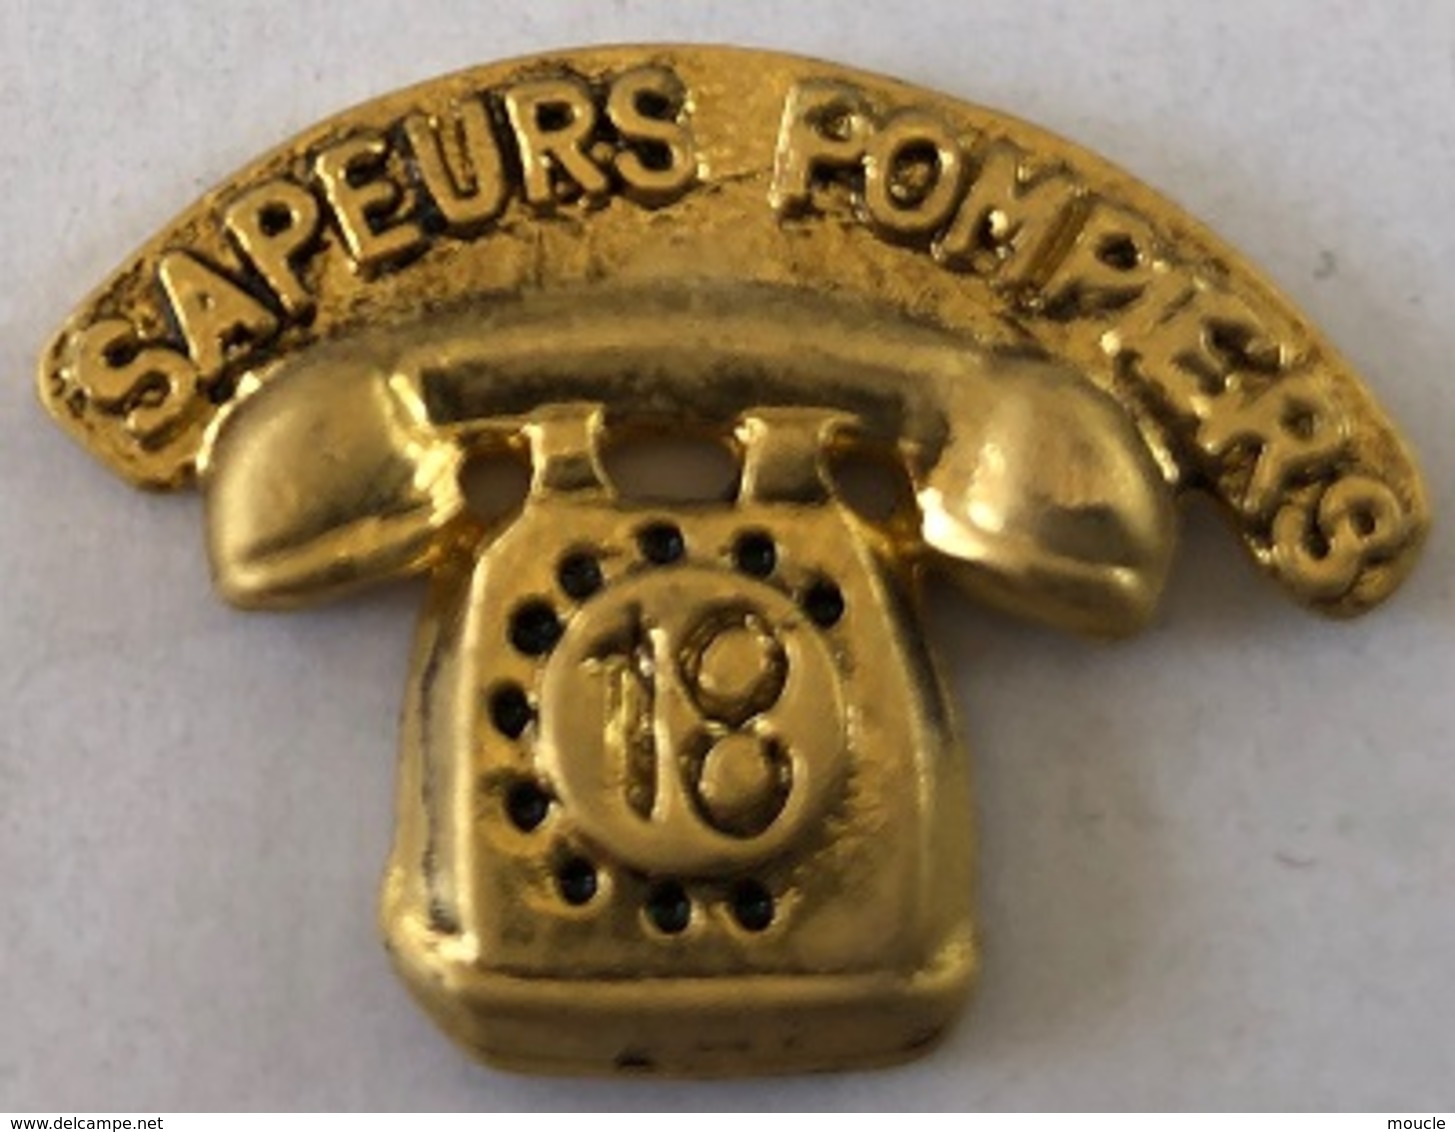 SAPEURS POMPIERS - TELEPHONE 18  - FRANCE - TELEFONO POMPIERE - PHONE  FIREFIGHTER - TELEFON FEUERWEHRMANN - (25) - Feuerwehr